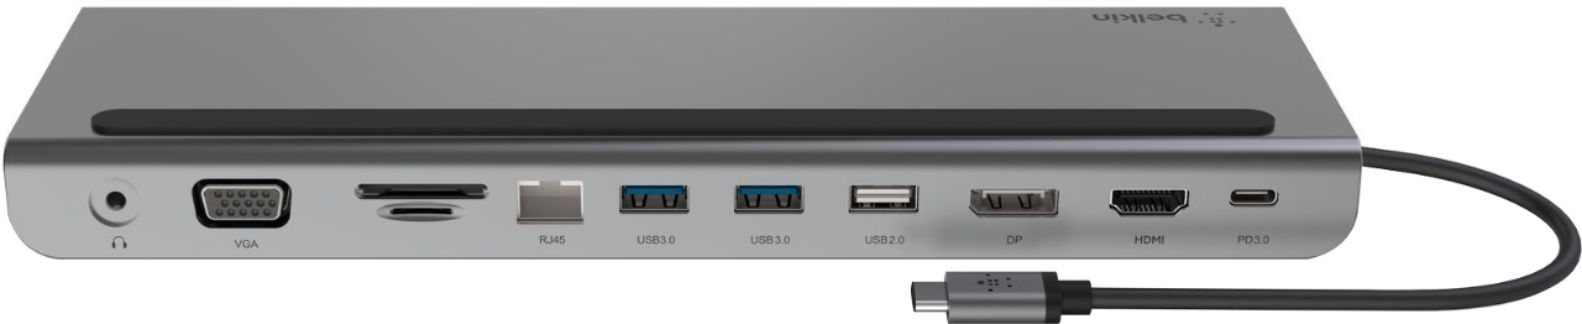 Belkin USB C 11 in 1 Multiport Dock